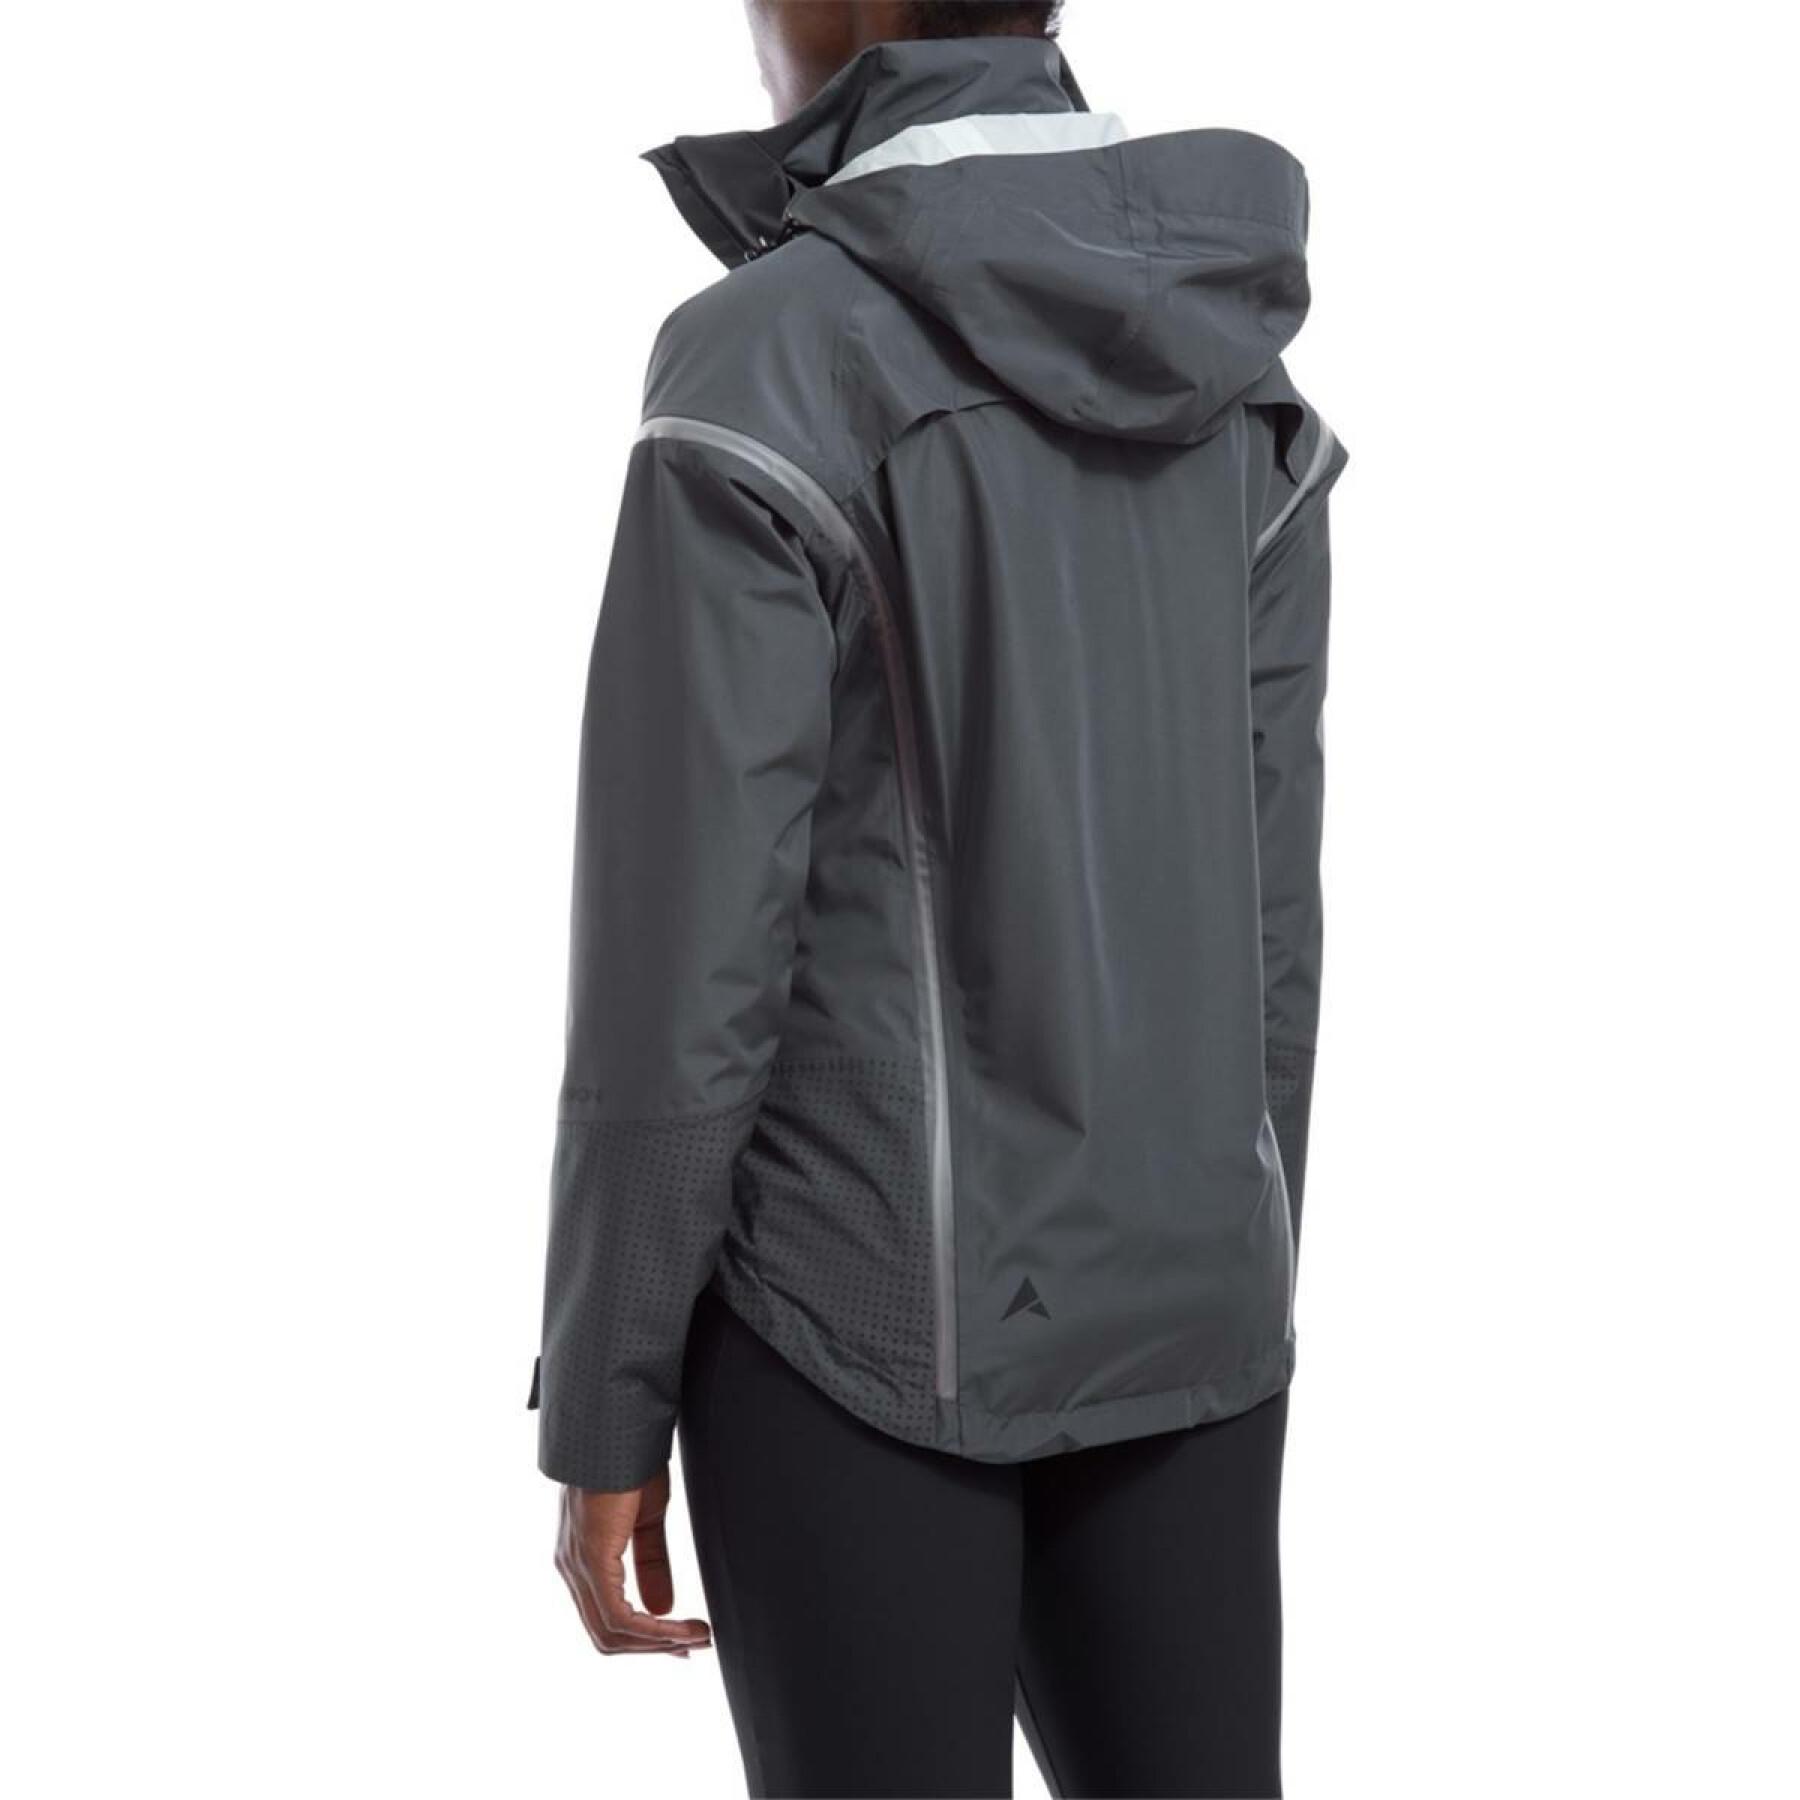 Women's waterproof jacket Altura Nightvision Electron